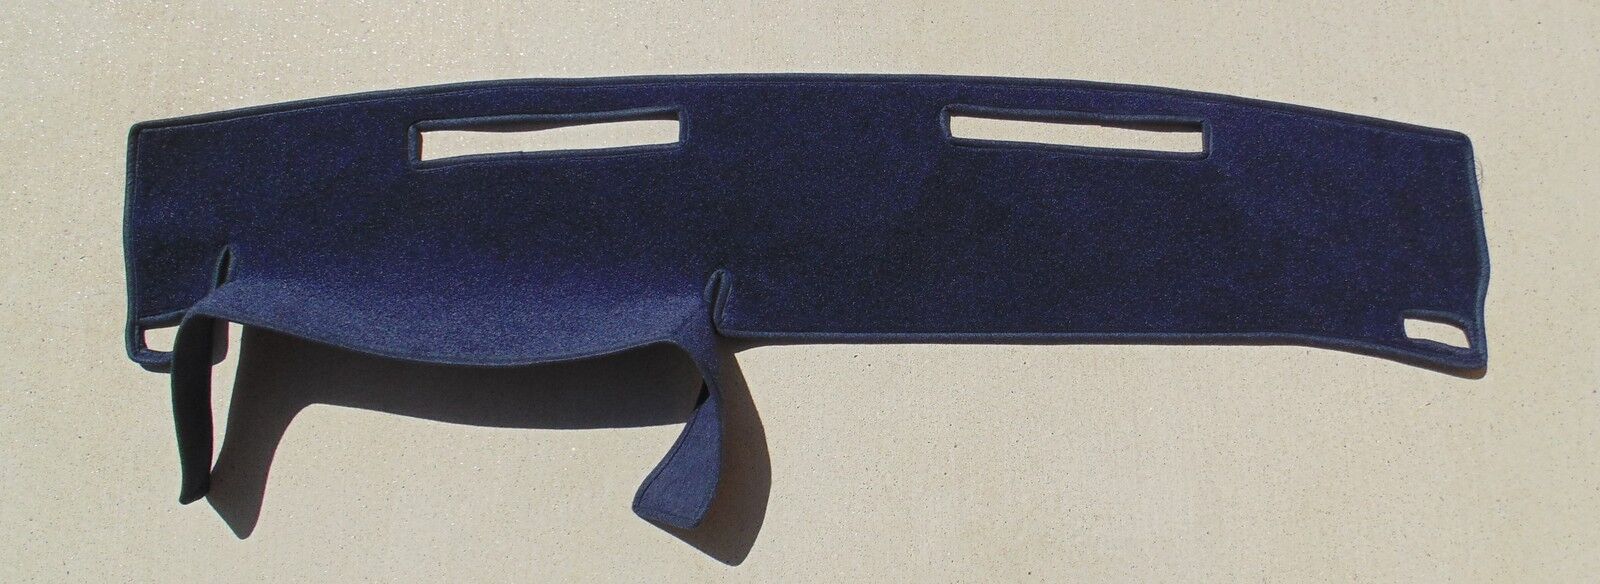 1986-1993 Chevrolet S10 Pickup dash cover mat dashboard pad navy blue